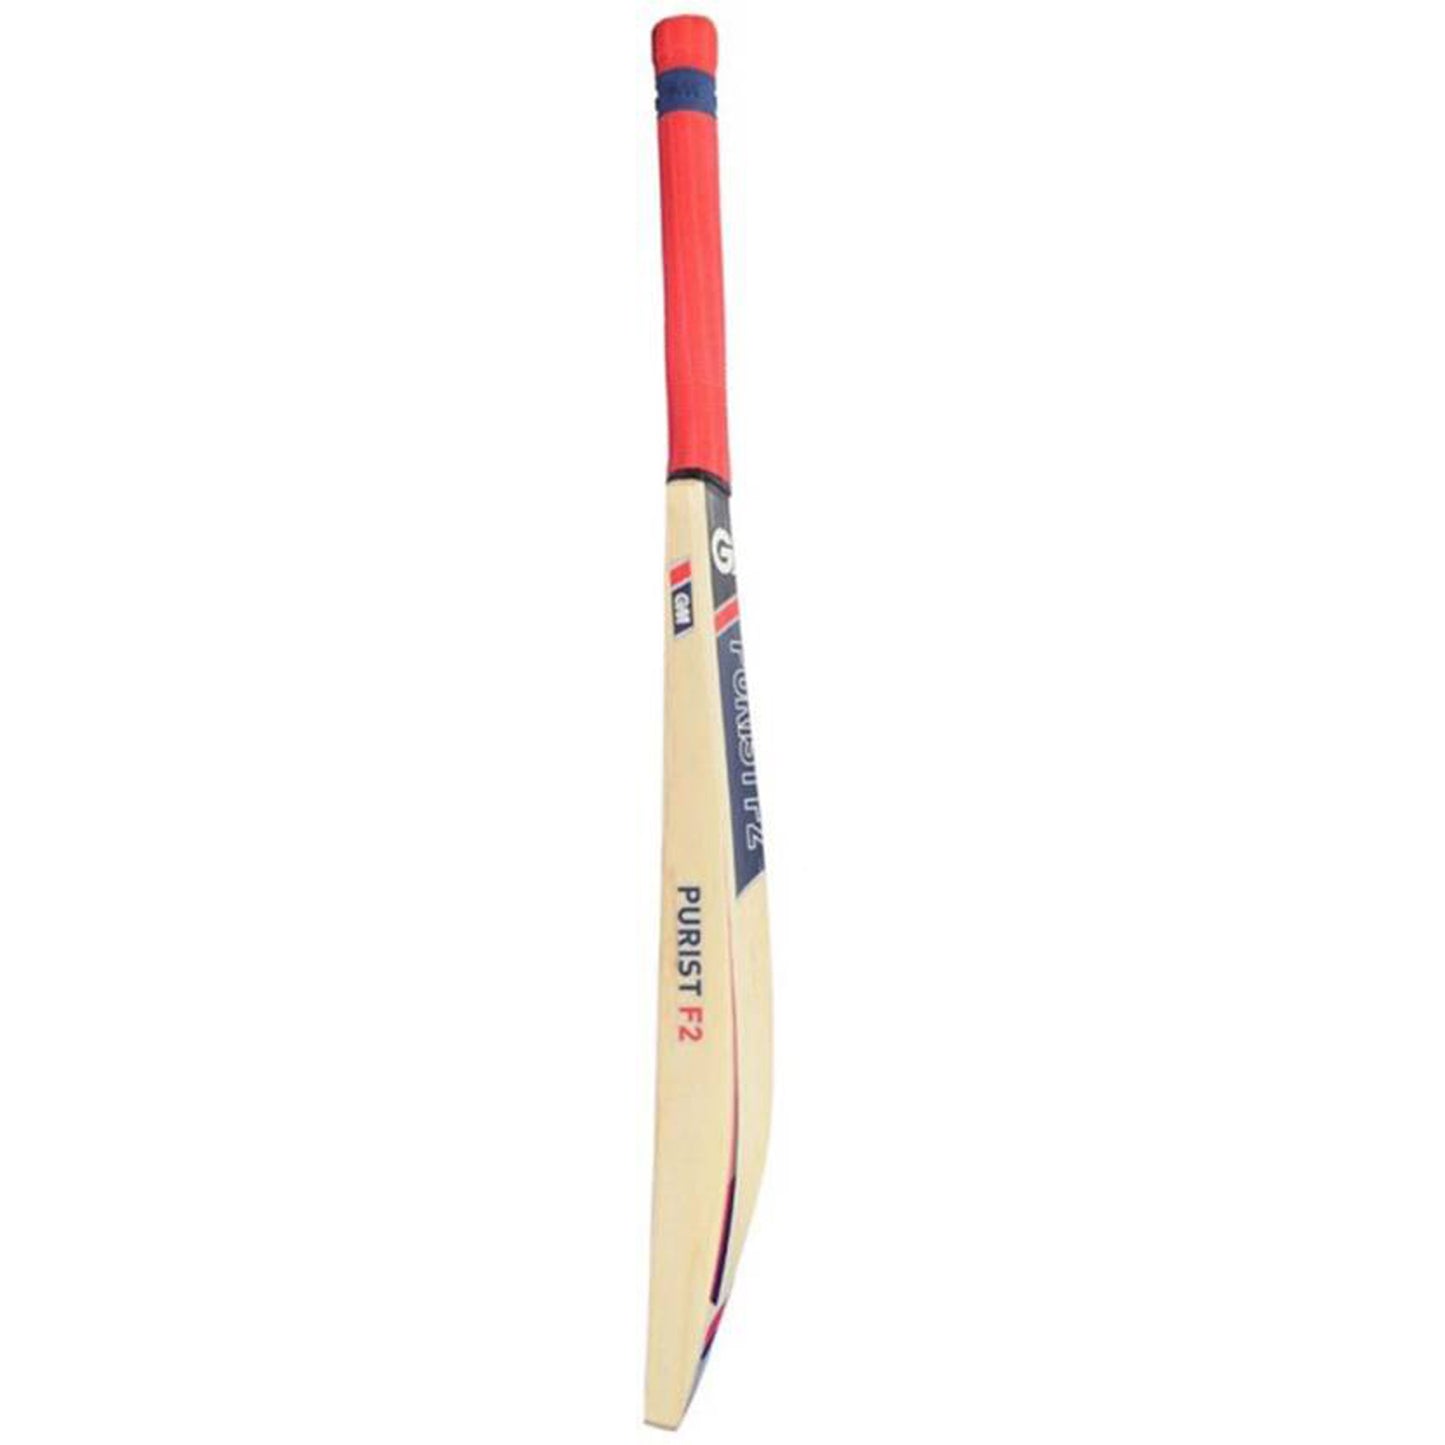 GM Purist F2 Striker Kashmir Willow Cricket Bat - Best Price online Prokicksports.com